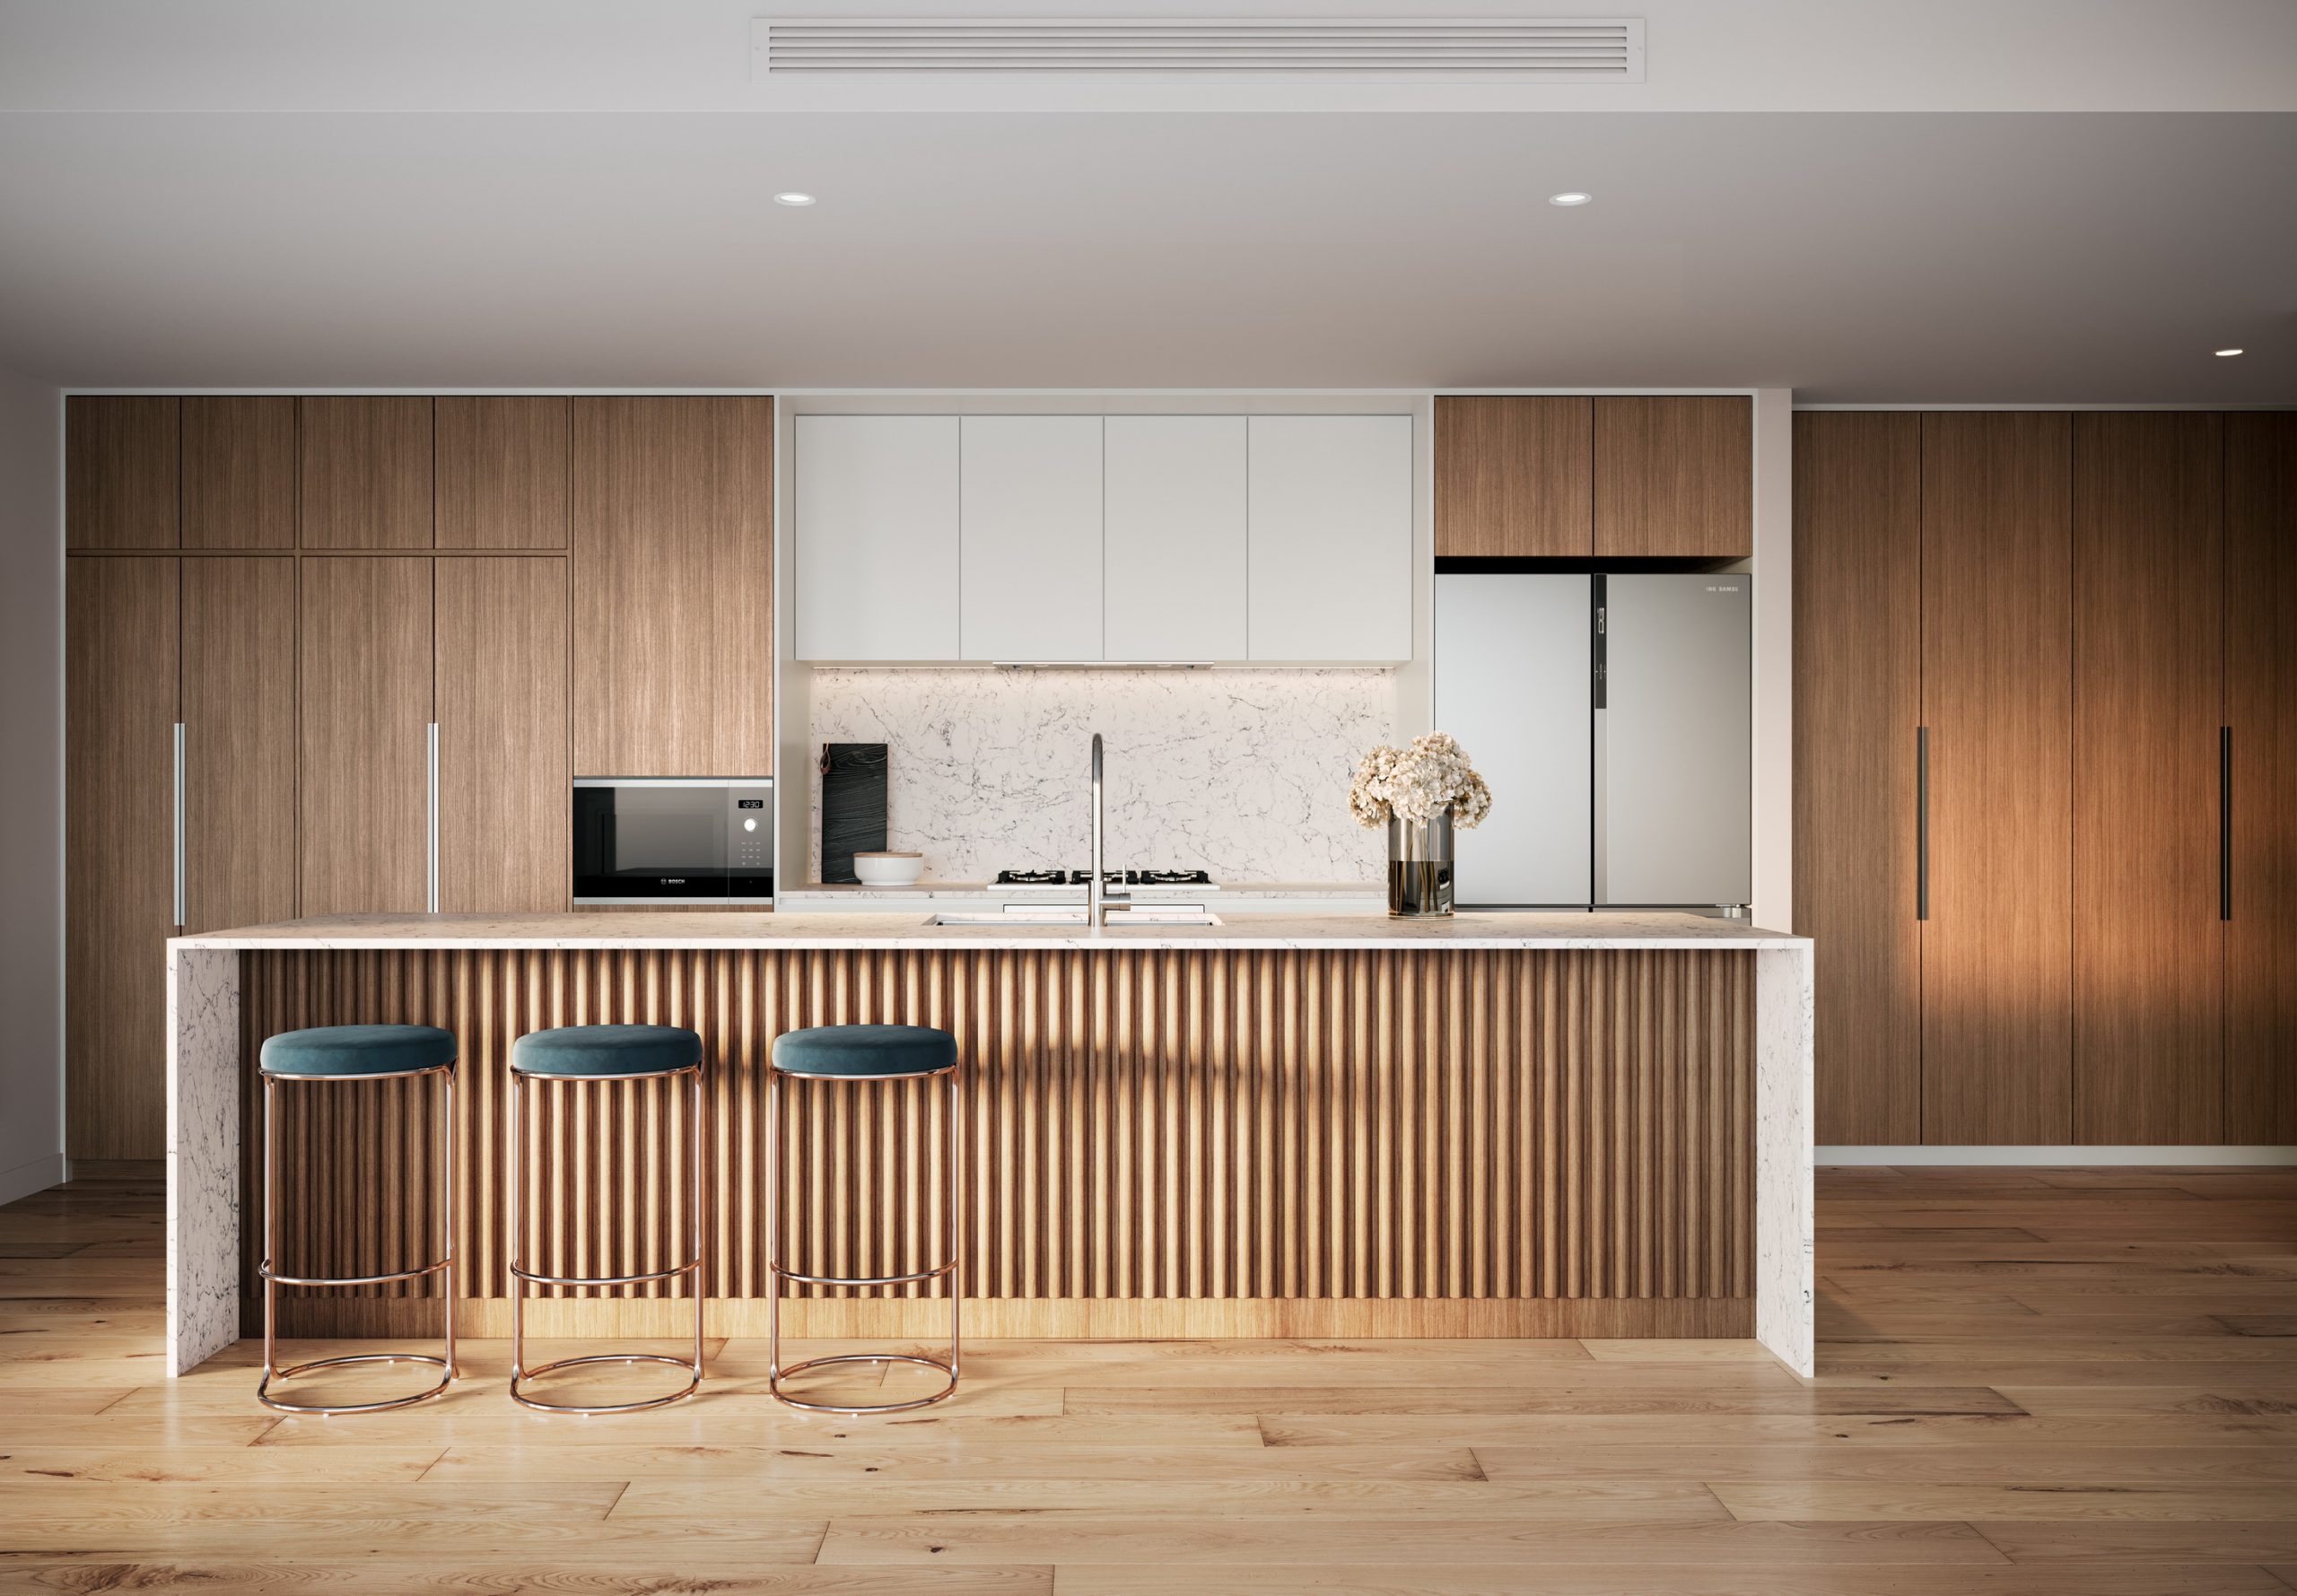 render-fkd-studio-penthouse-rivello-design-3d-kitchen